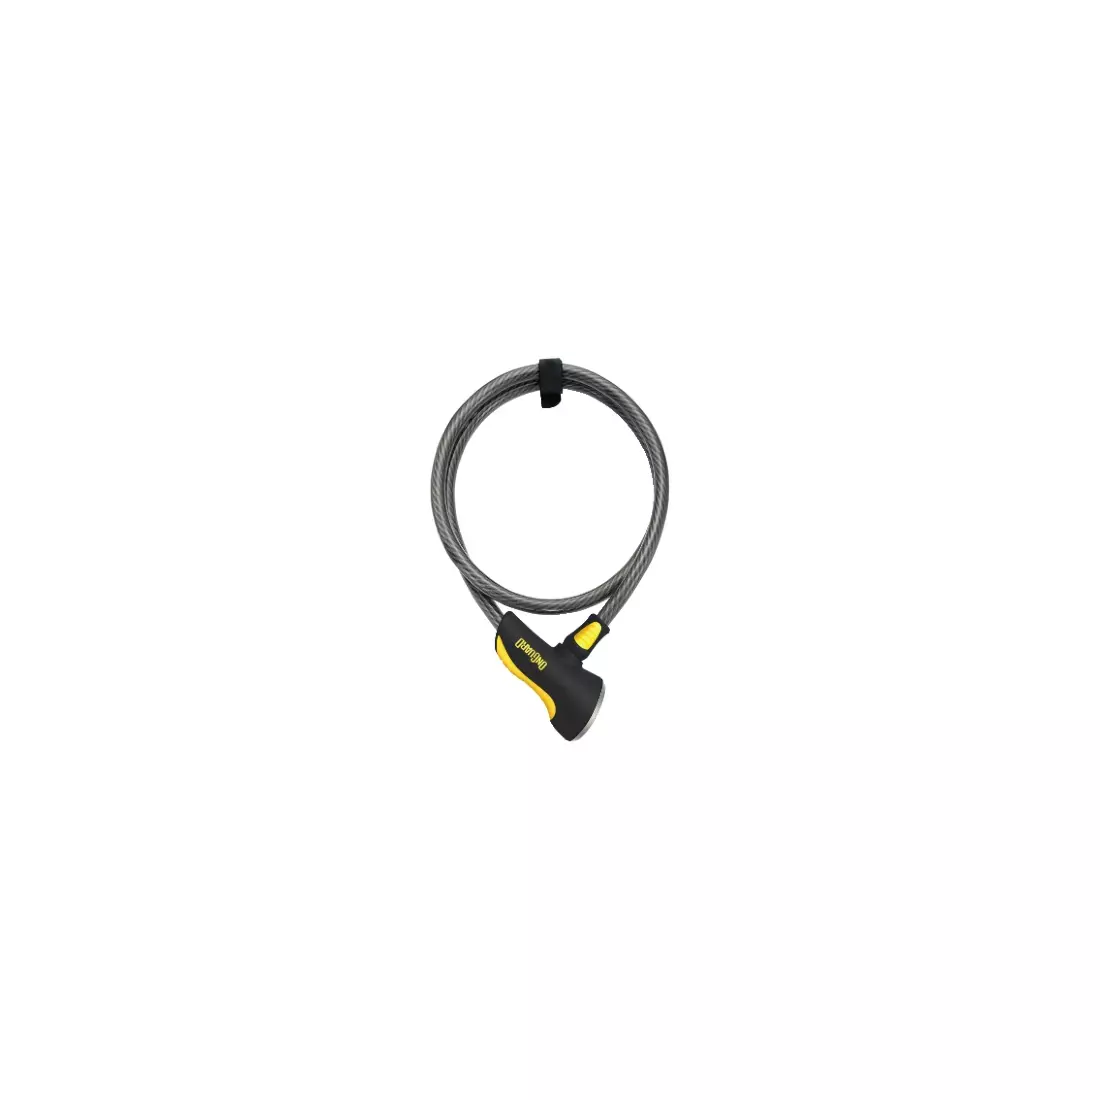 Bicycle lock ONGUARD Akita 8040 safety collar - 12mm 185cm - 5 x key